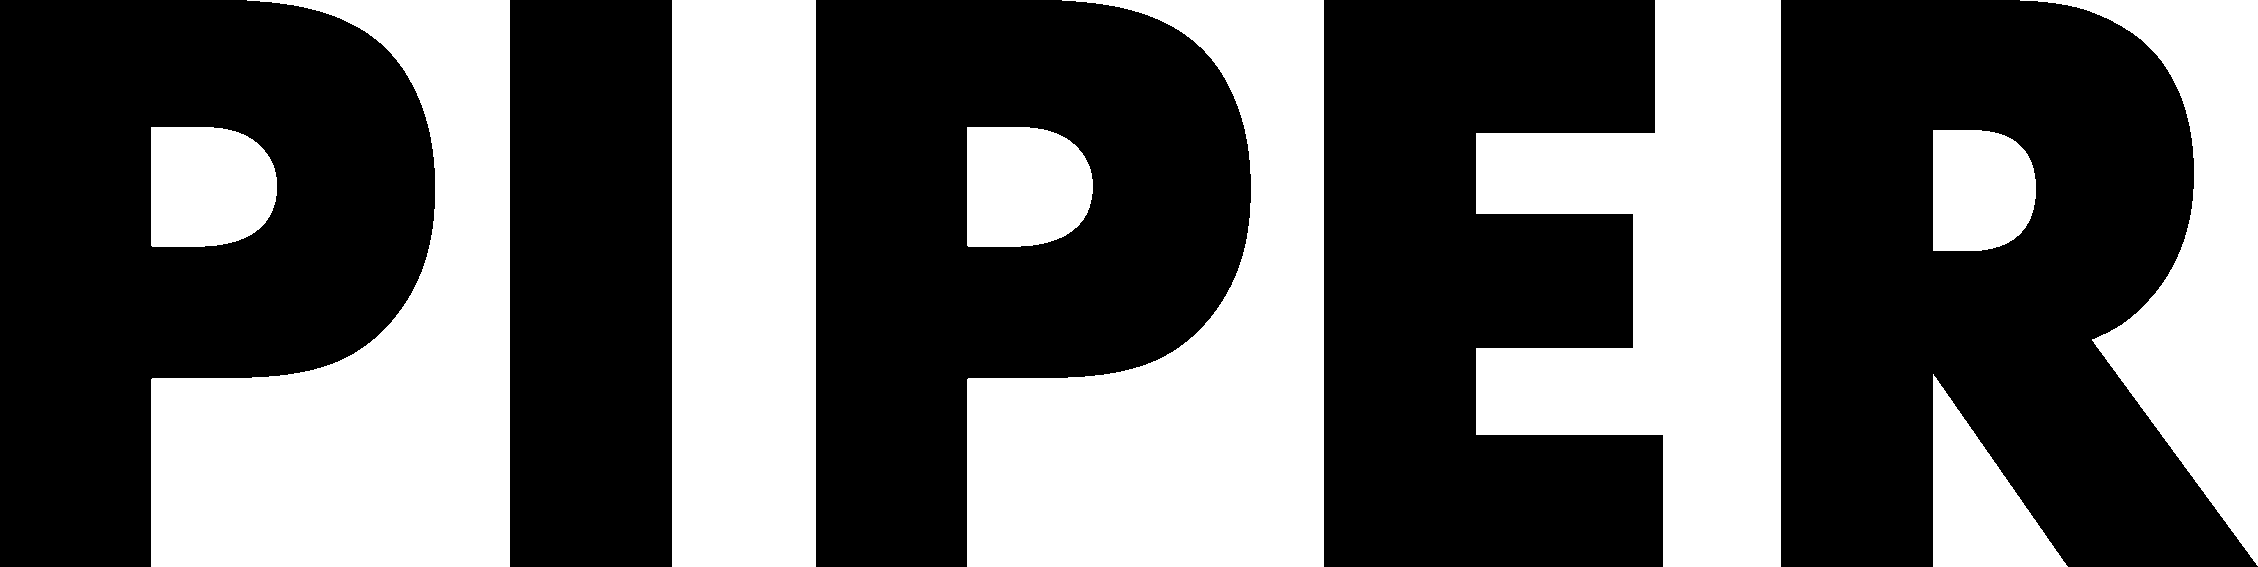 piper_logo_horizontal